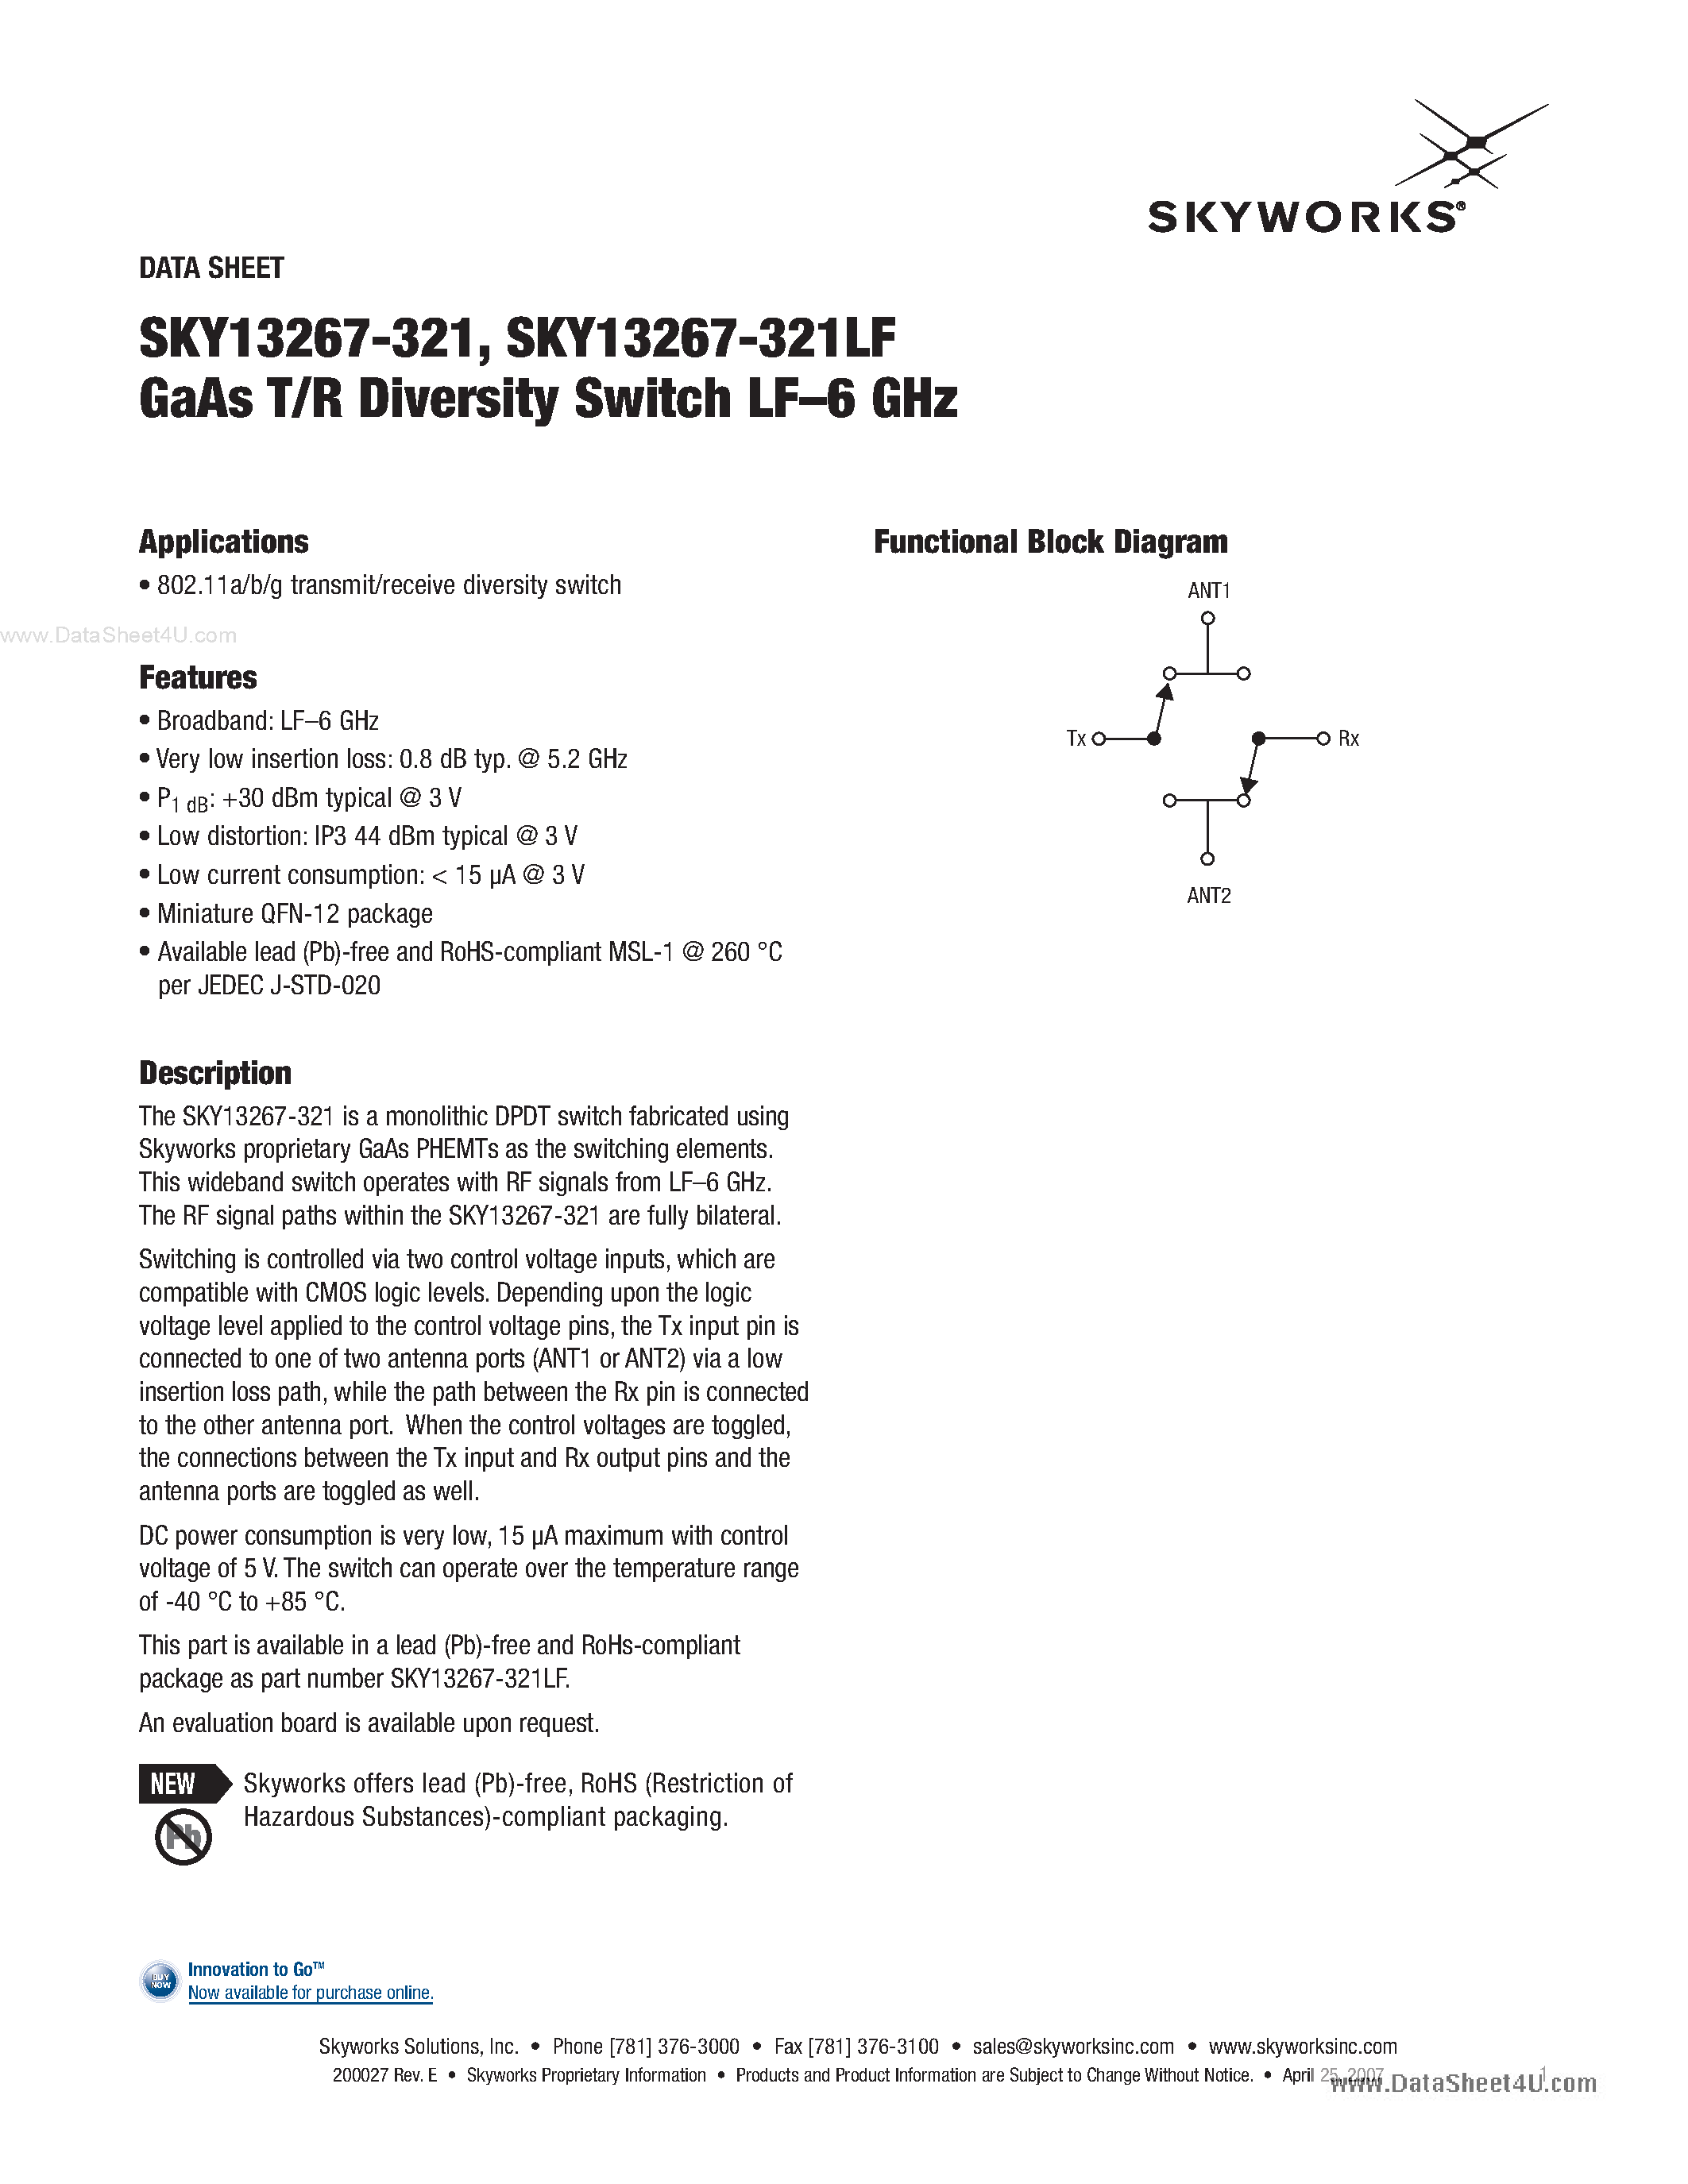 Datasheet SKY13267-321 - GaAs T/R Diversity Switch LF-6 GHz page 1